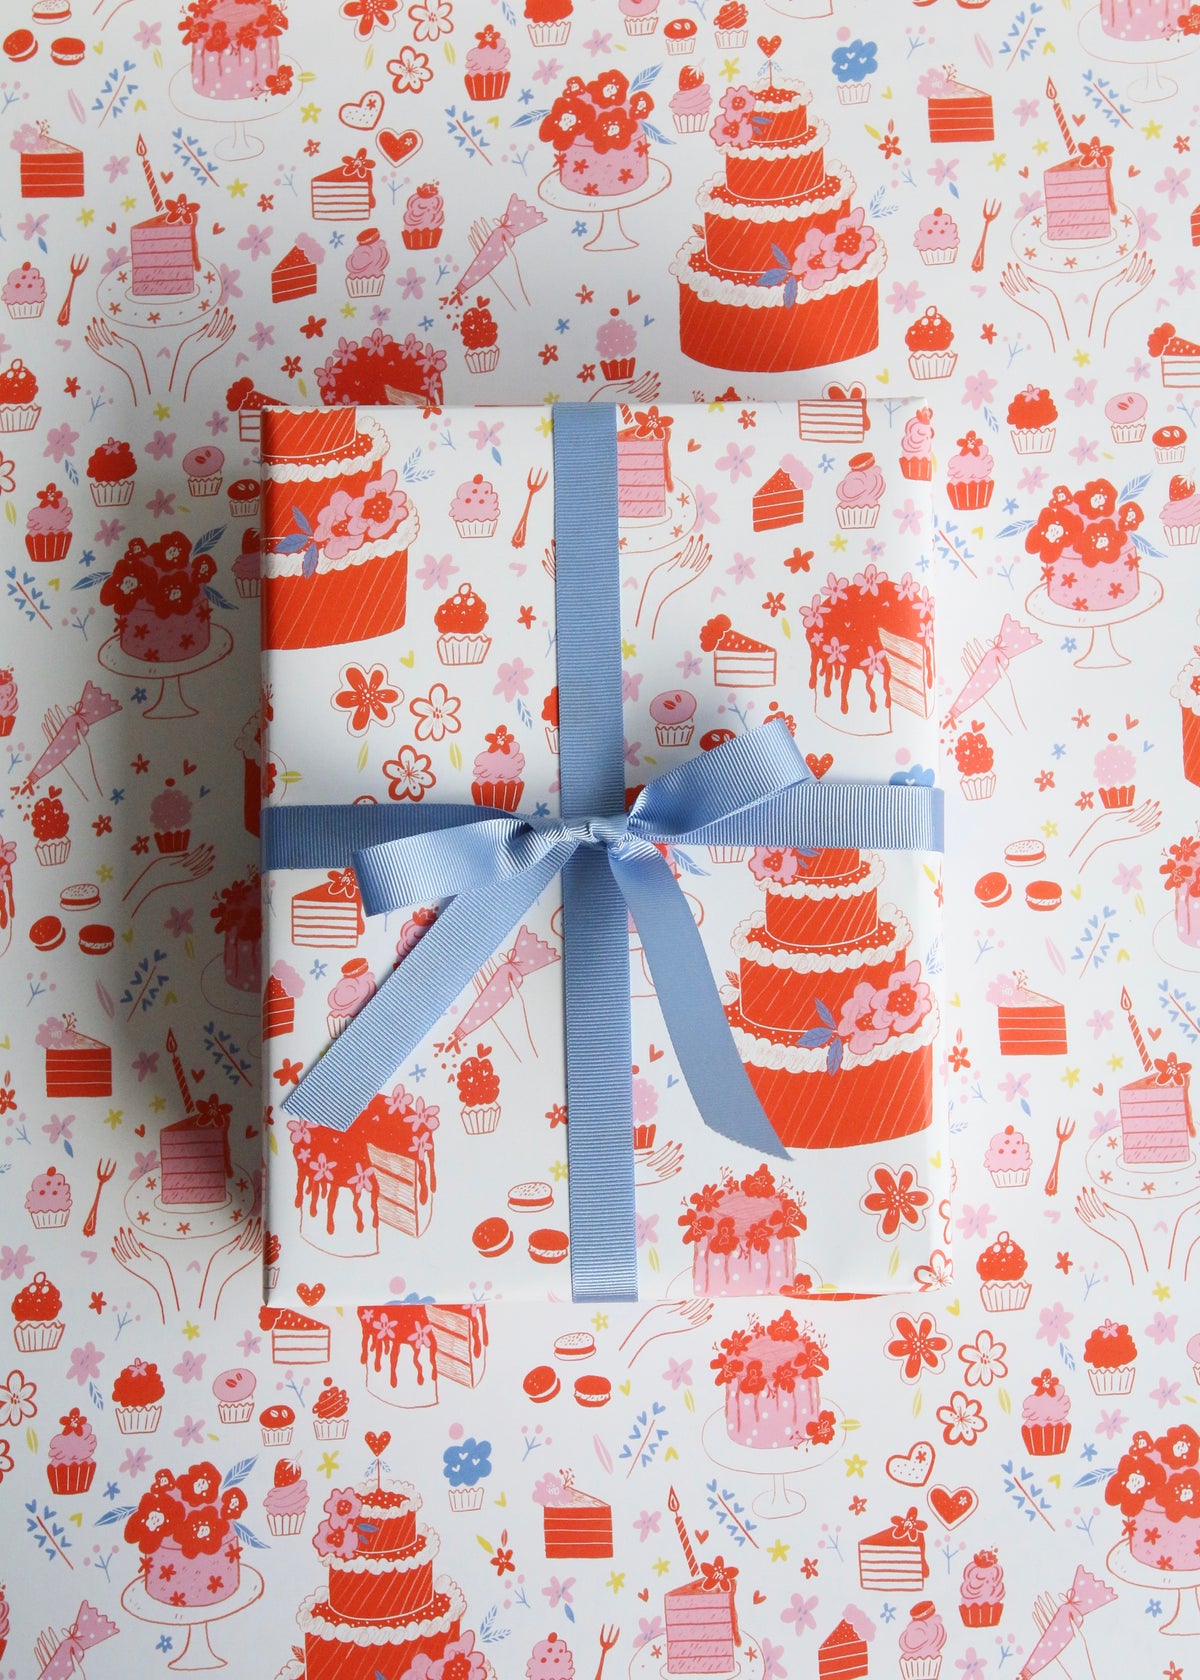 Cake & Cupcakes Orange Wrapping Paper